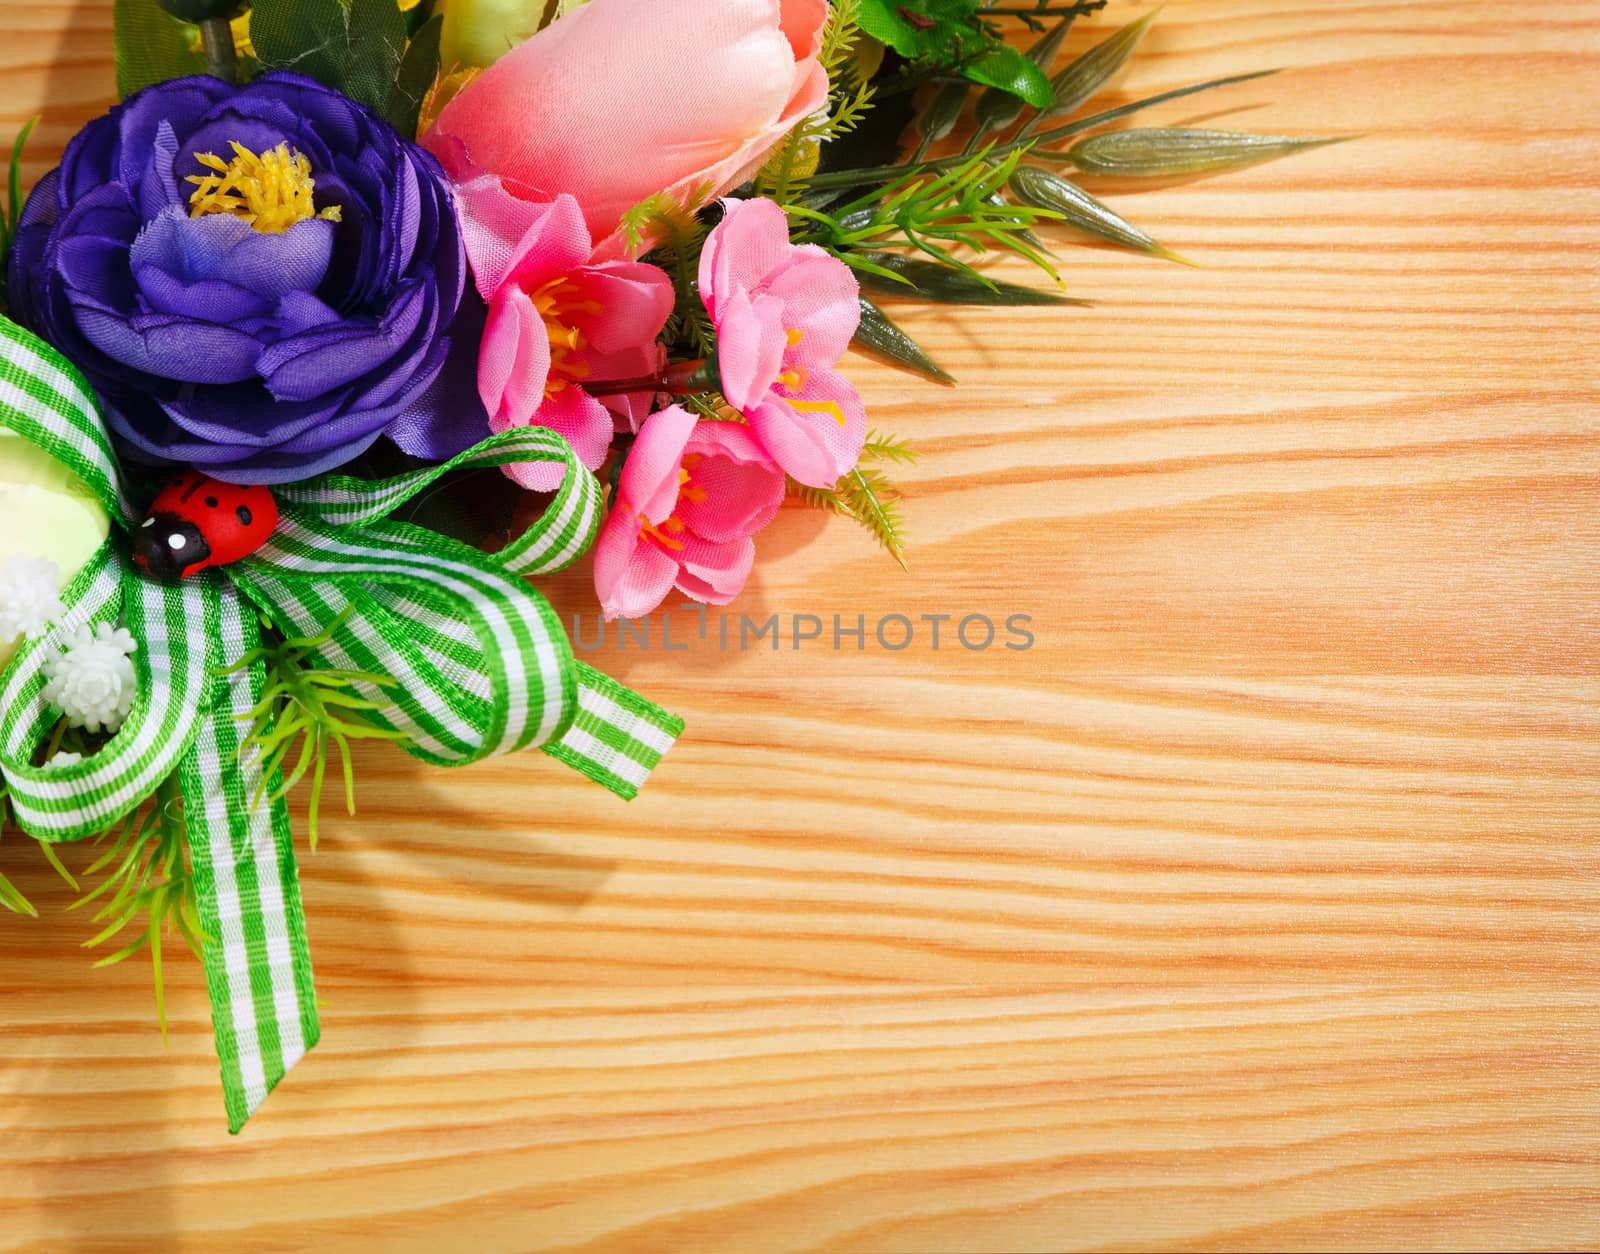 floral arrangement on a wooden texture